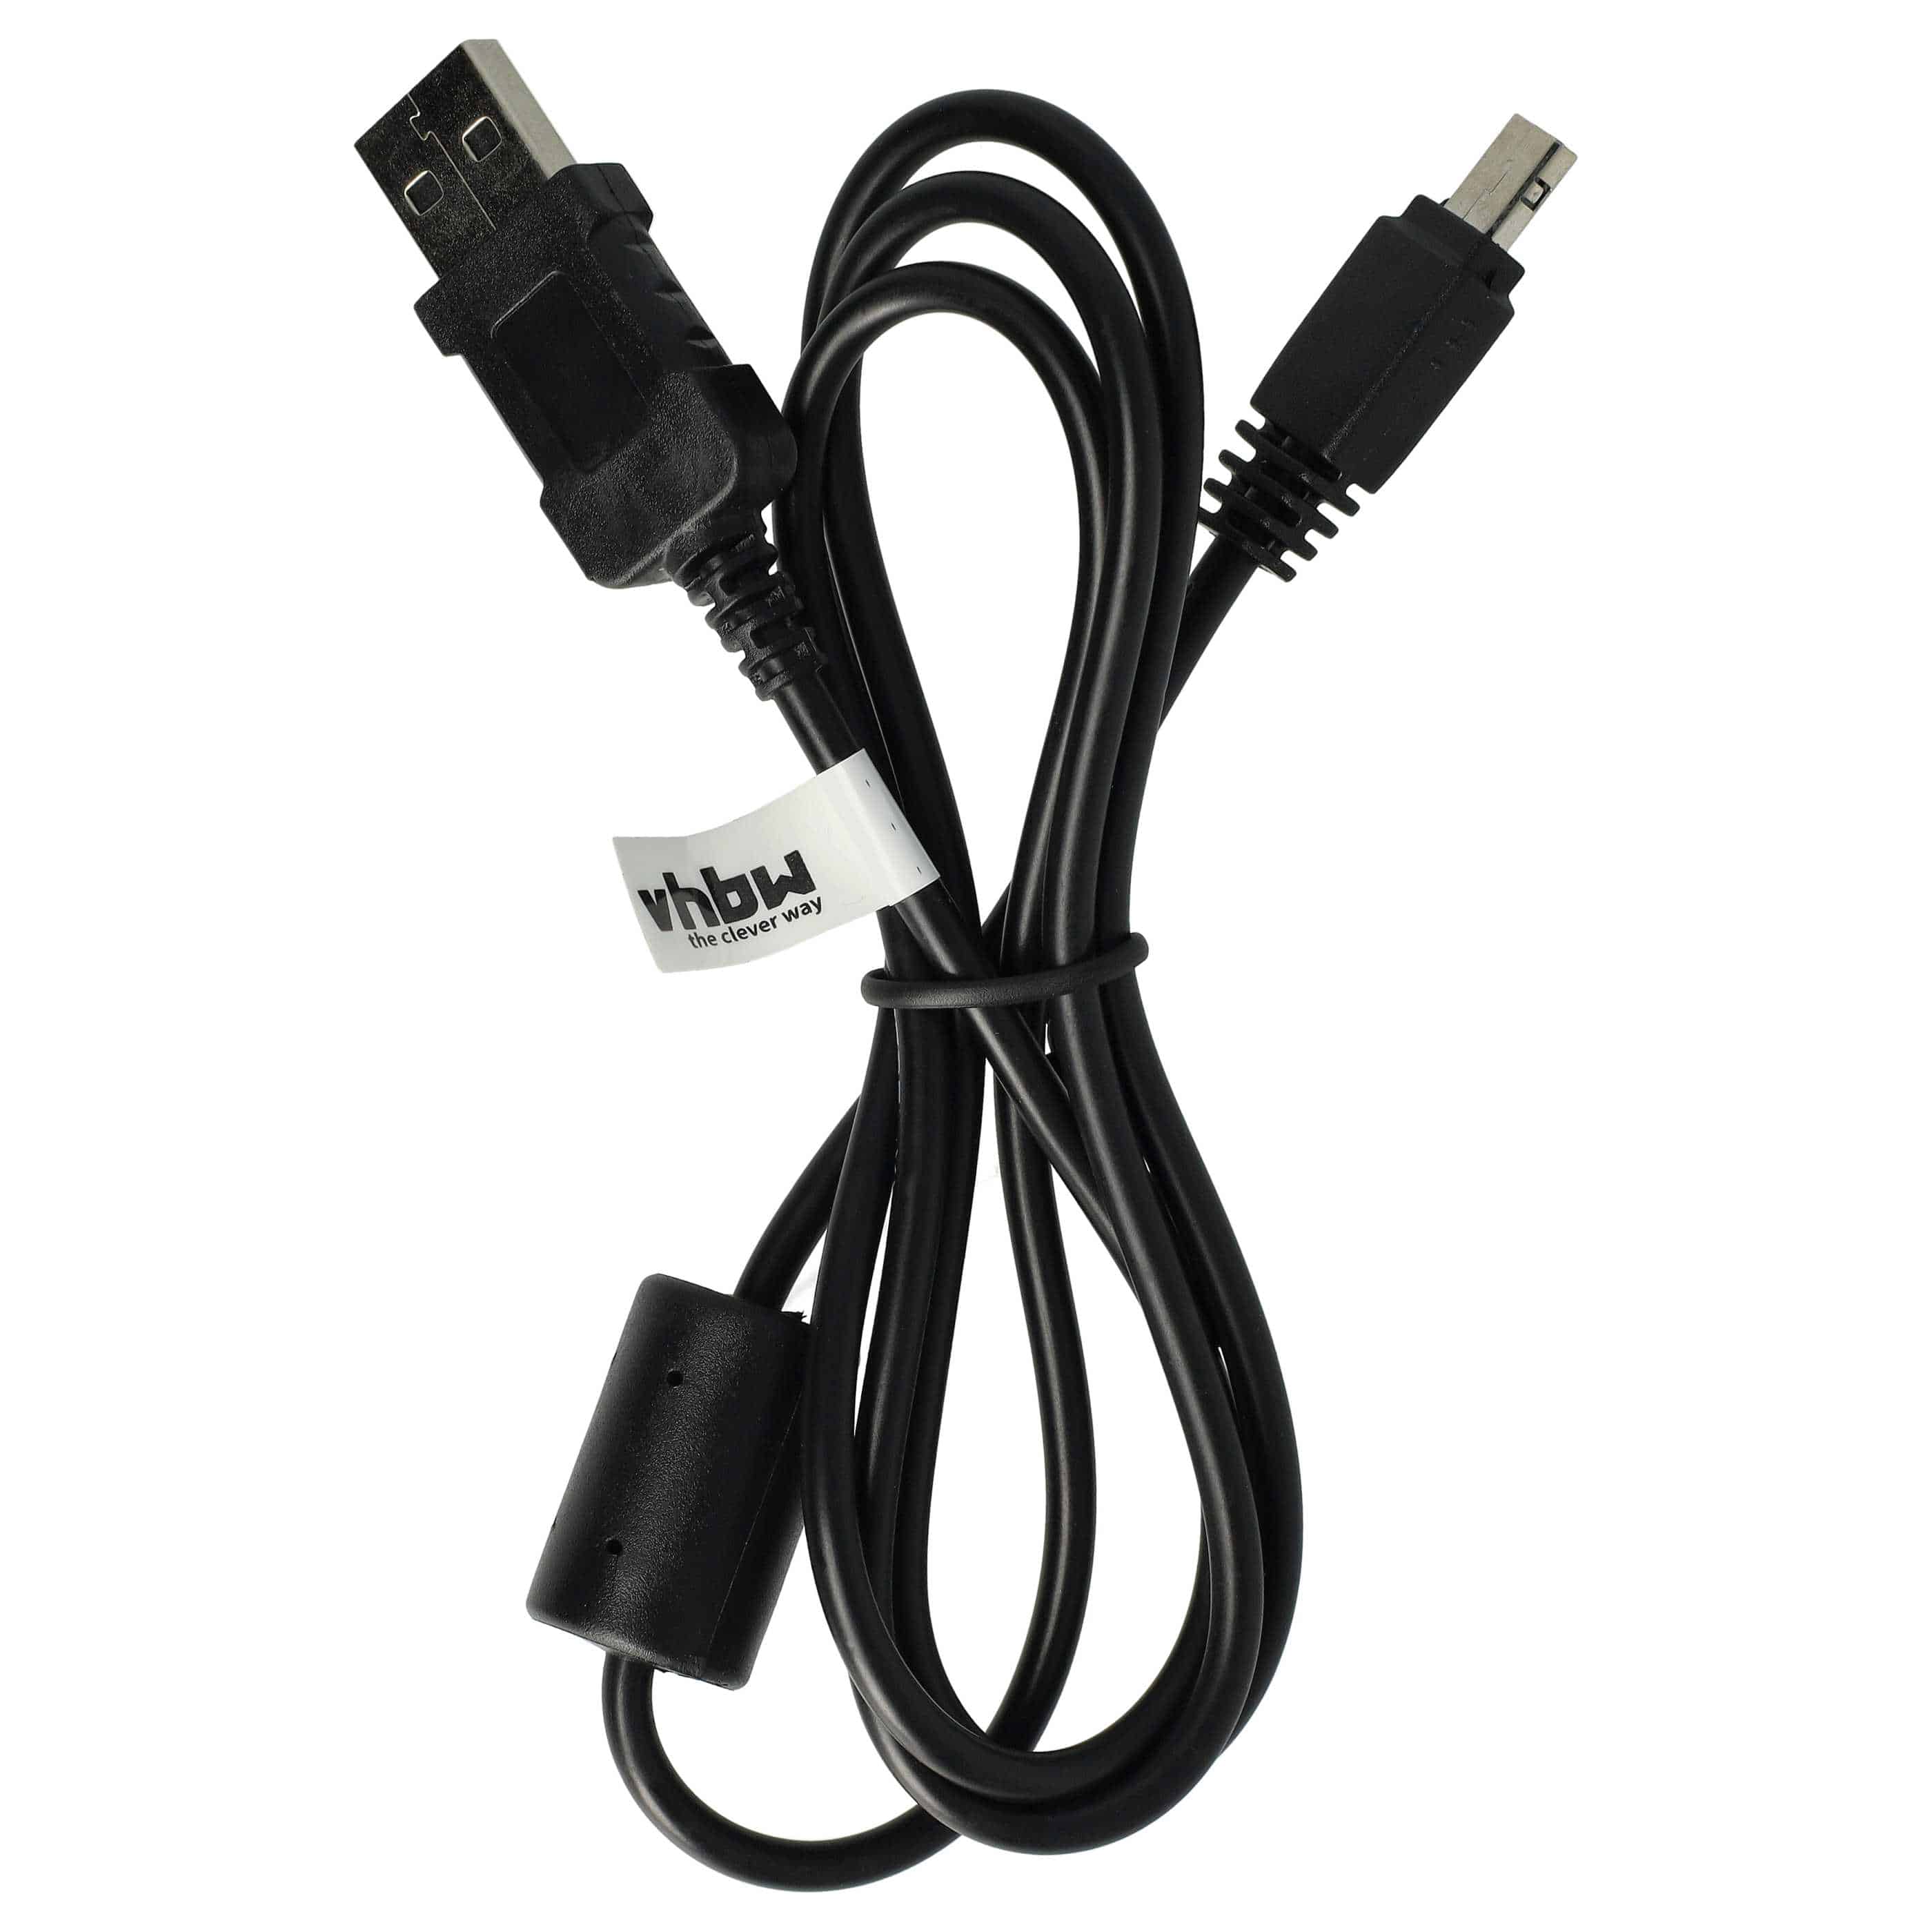 Cable de datos USB reemplaza Casio U-8, EMC-6U, EMC-6 para cámaras Casio - 100 cm